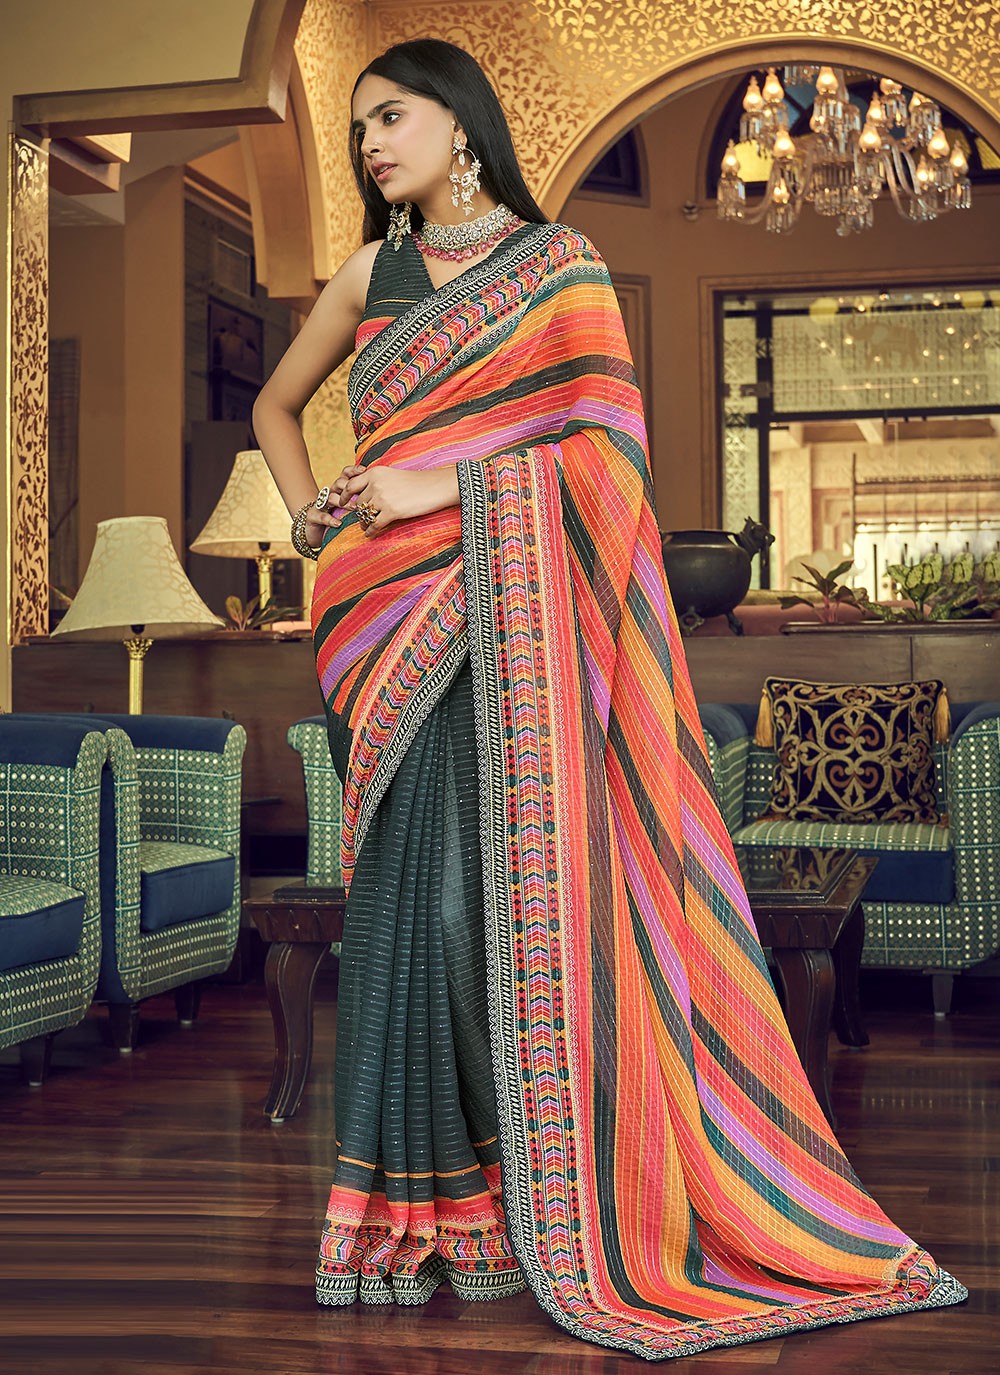 Saree Party Indian Wear Sari Designer Bollywood Blouse Wedding Ethnic  Pakistani | eBay